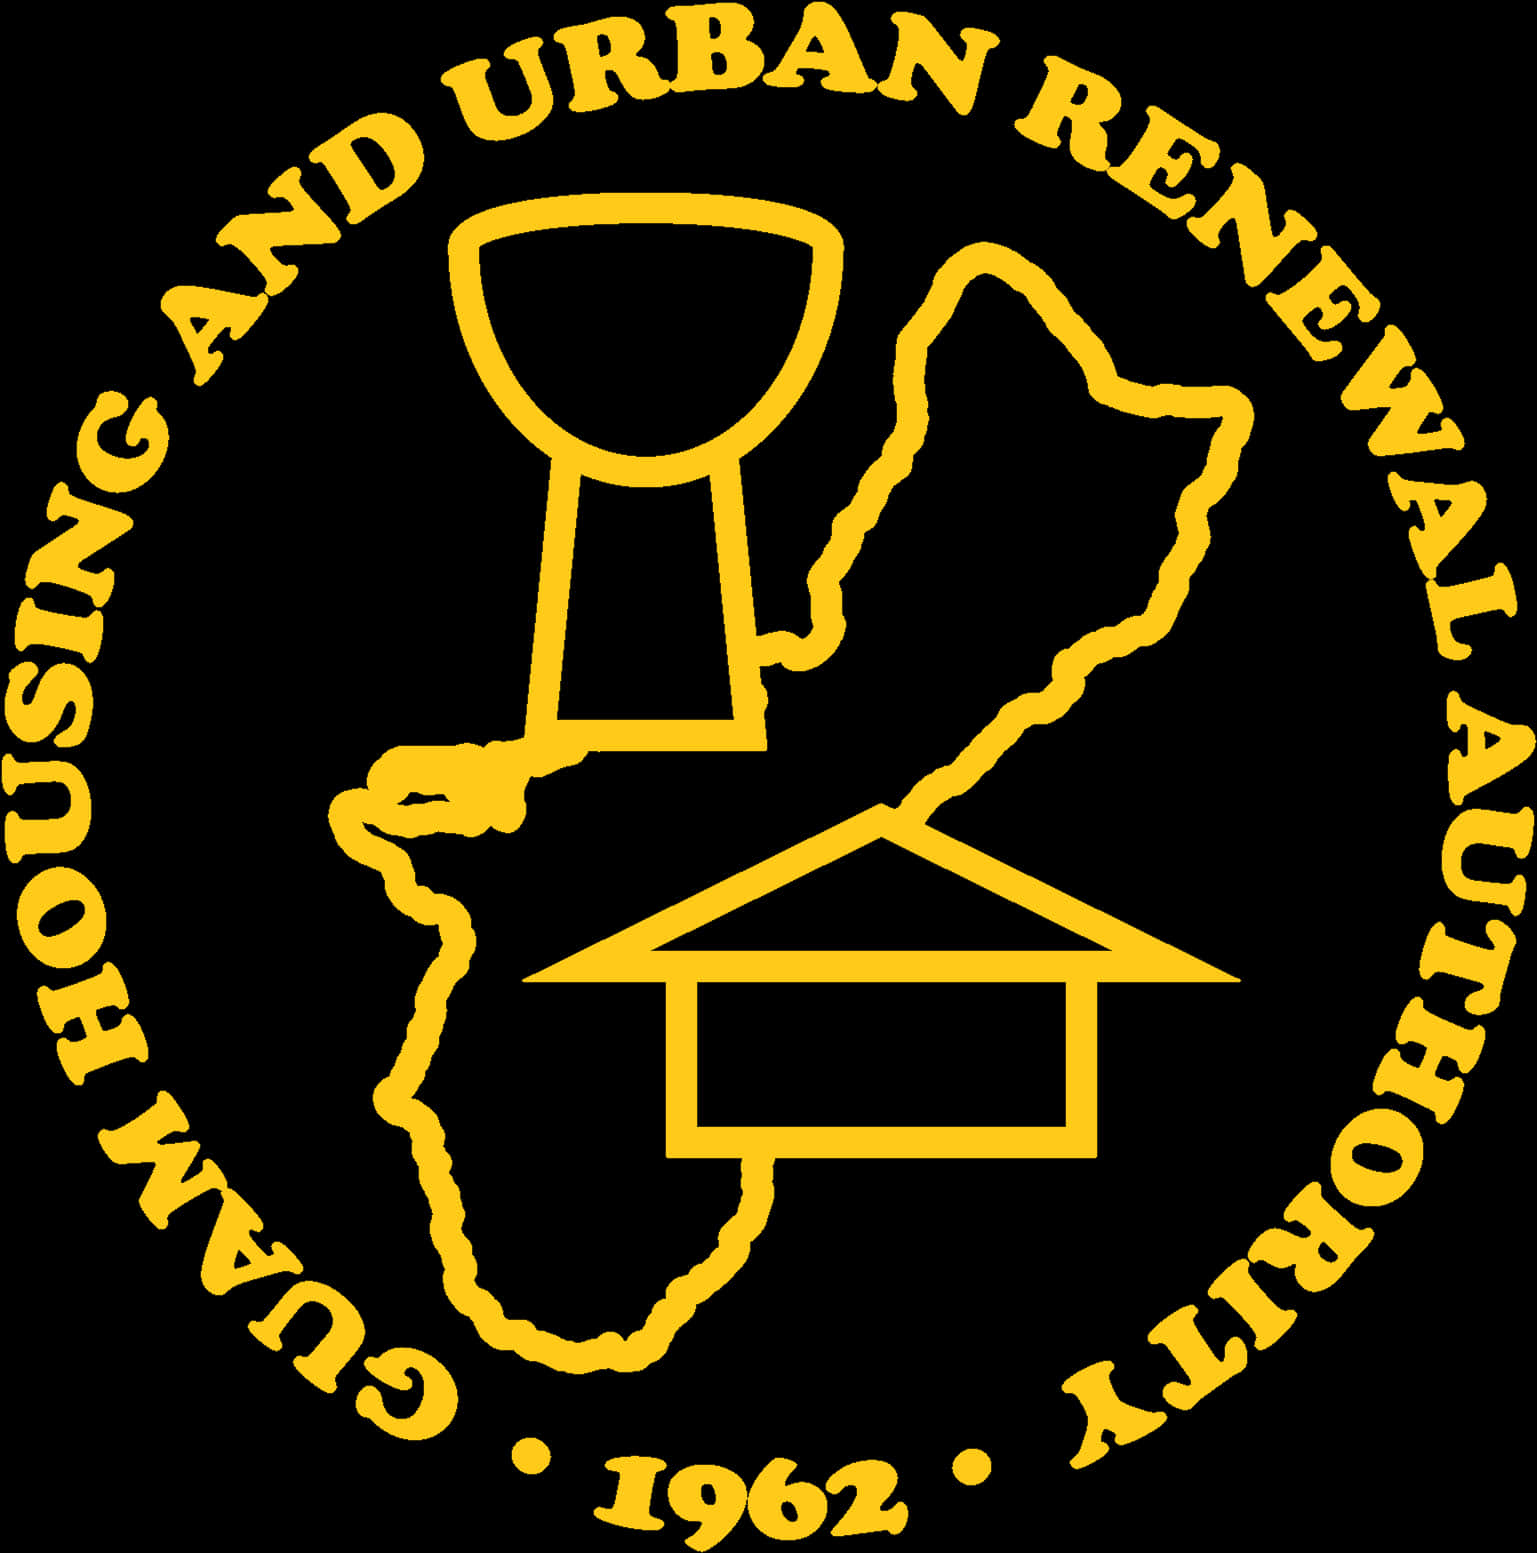 Download Housing Urban Renewal Authority Logo1962 | Wallpapers.com